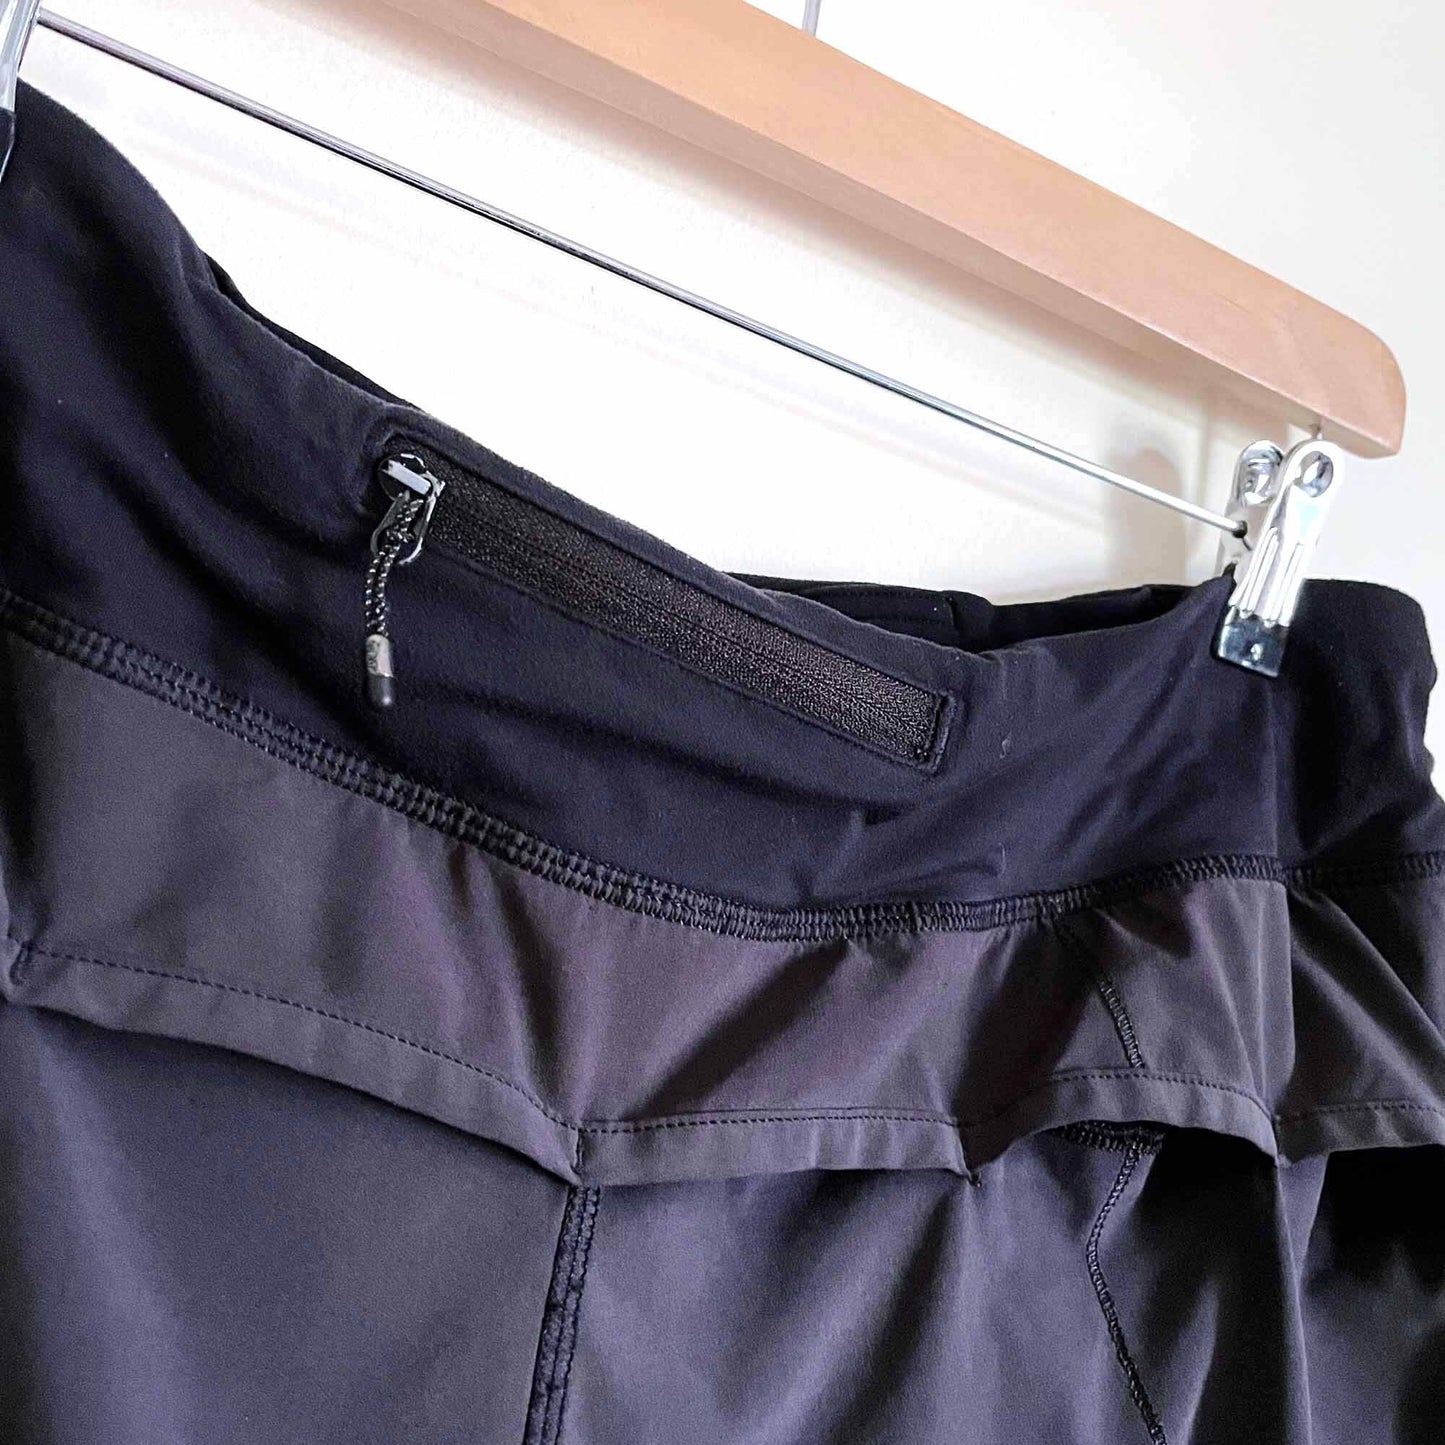 lululemon black drawstring running shorts - size 10